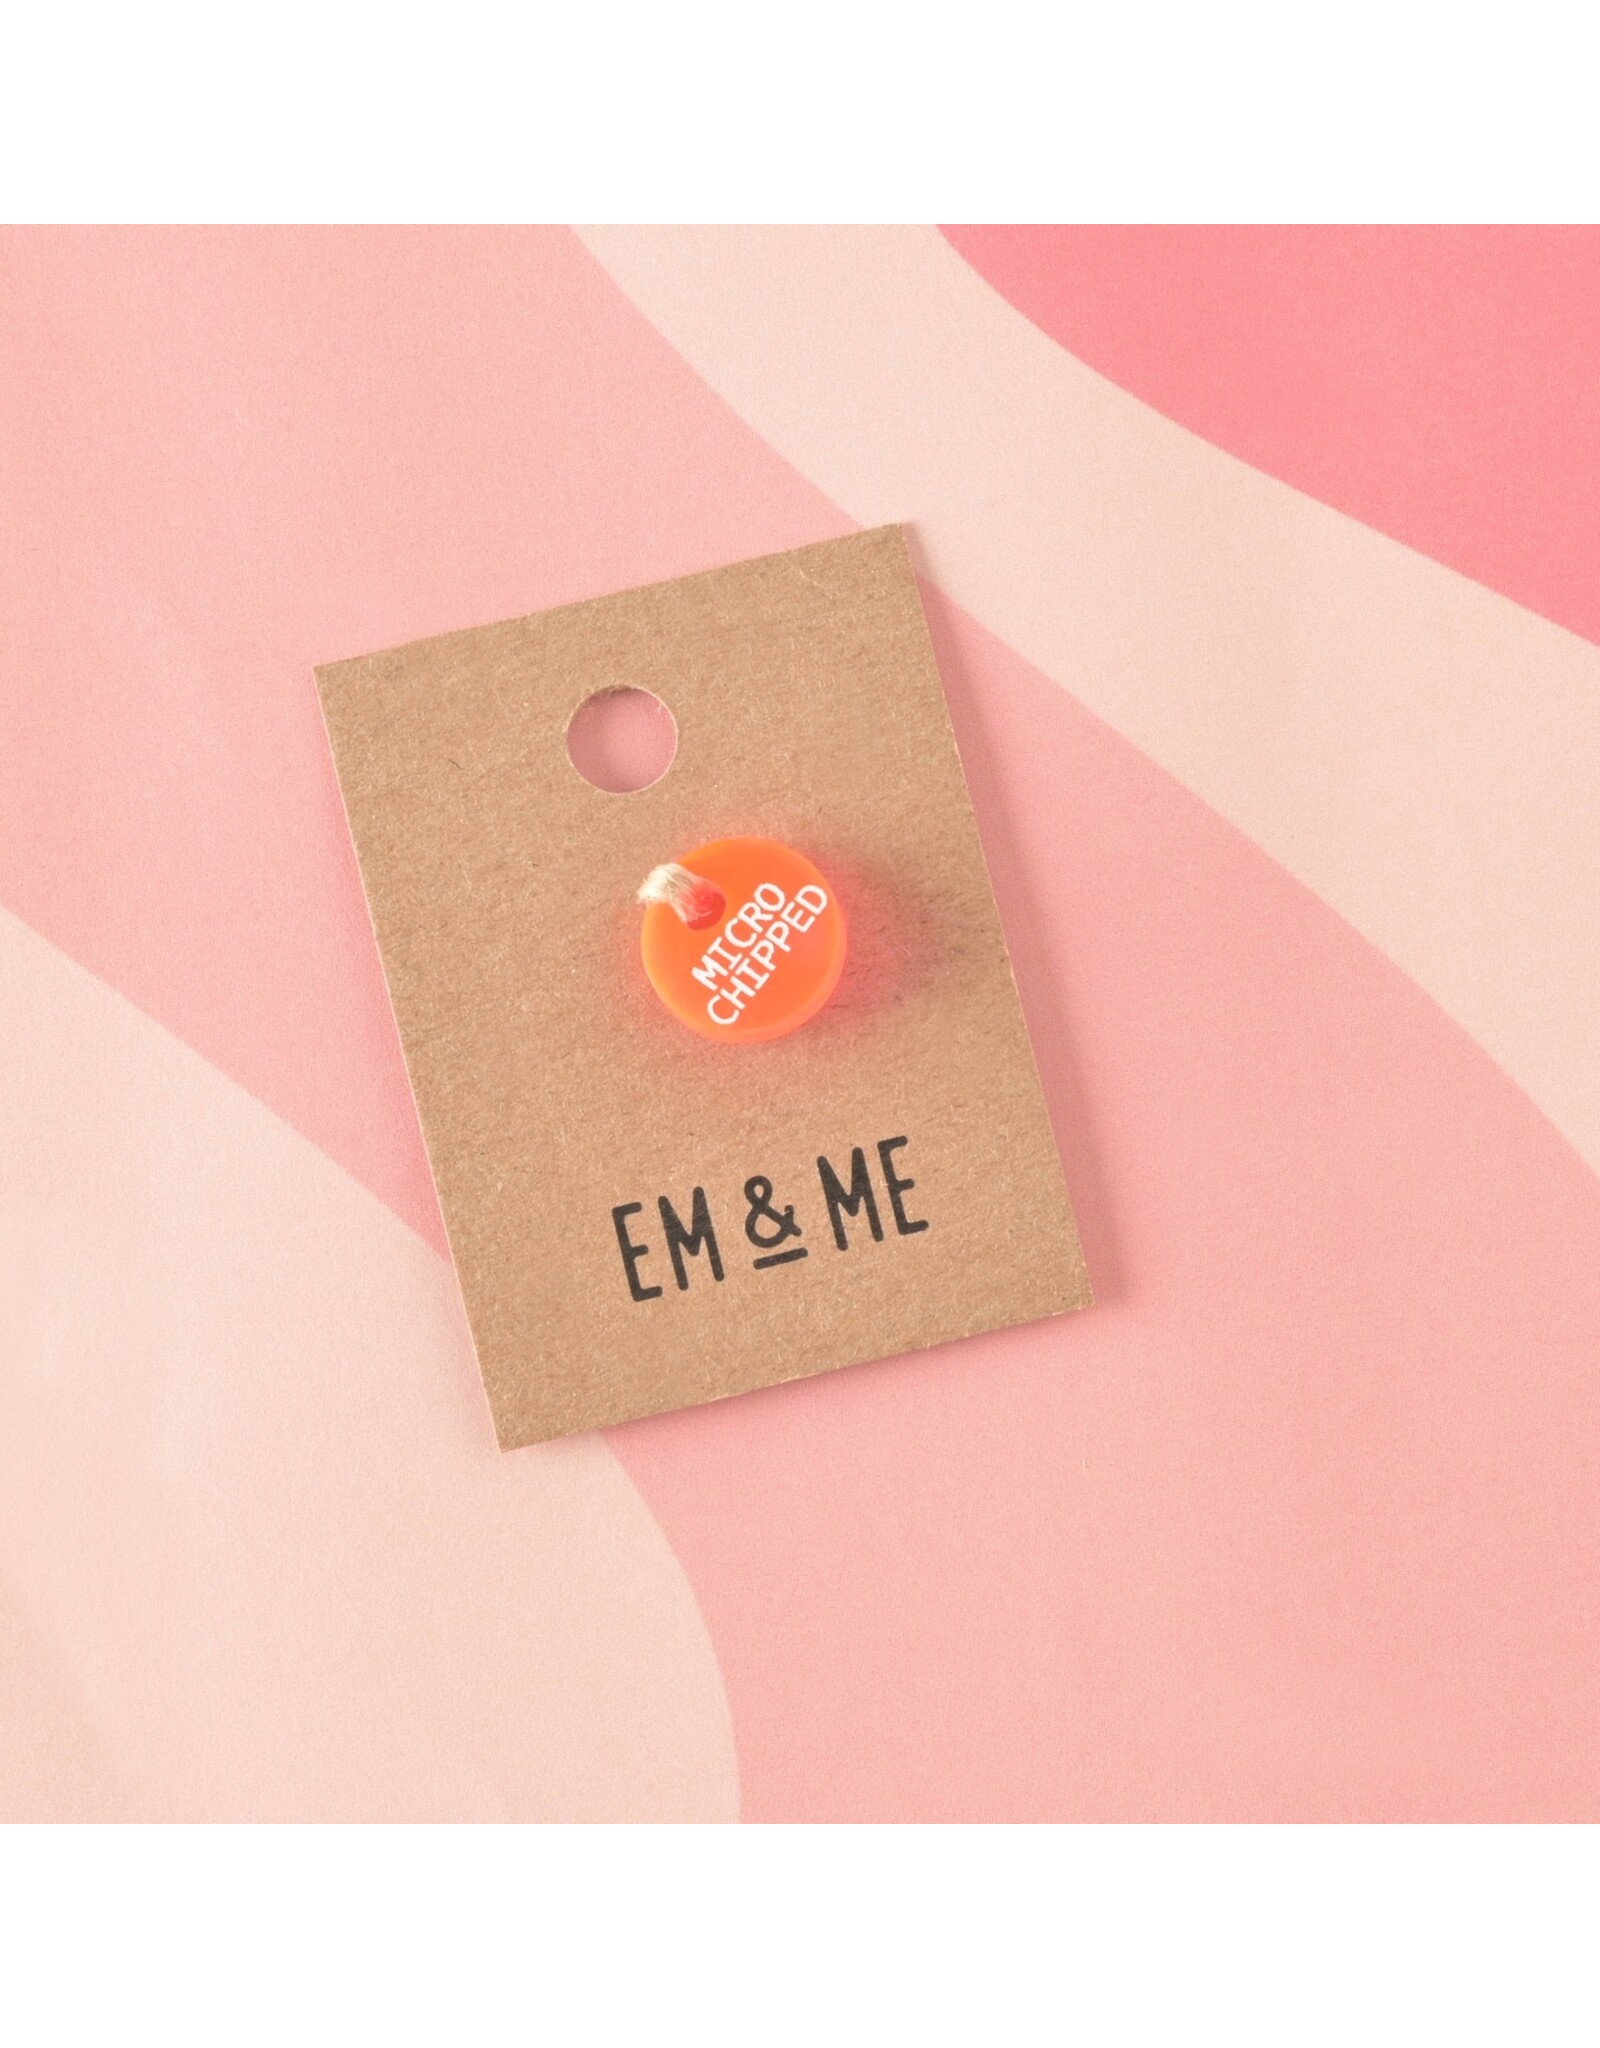 Em & Me Studio Flourescent Pink "Microchipped" Tag